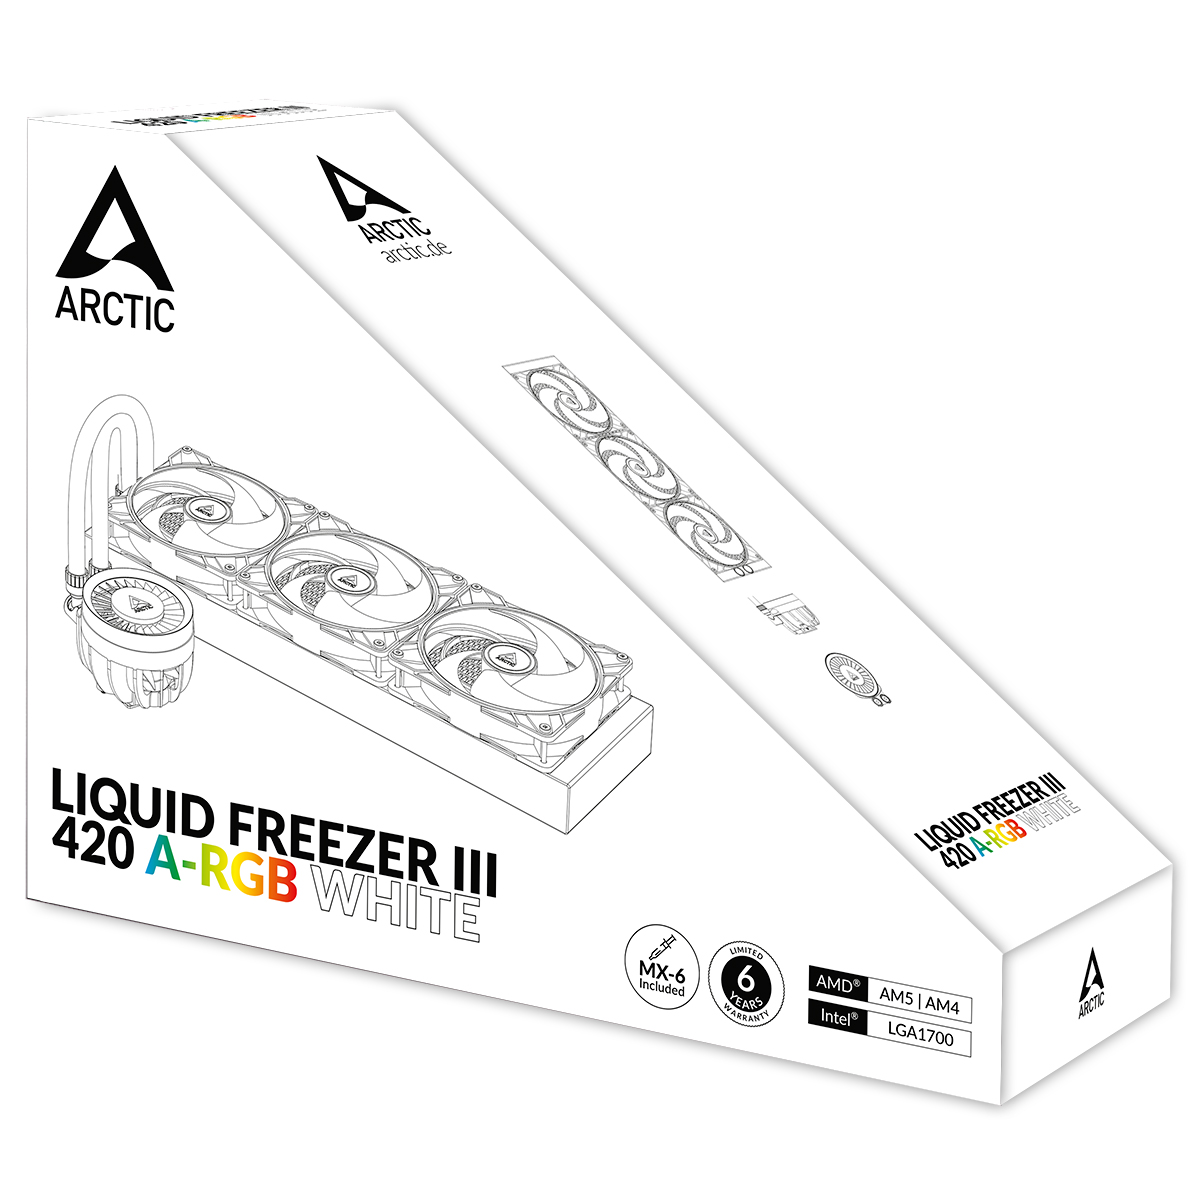 Liquid_Freezer_III_420_ARGB_White_Rainbow_G11